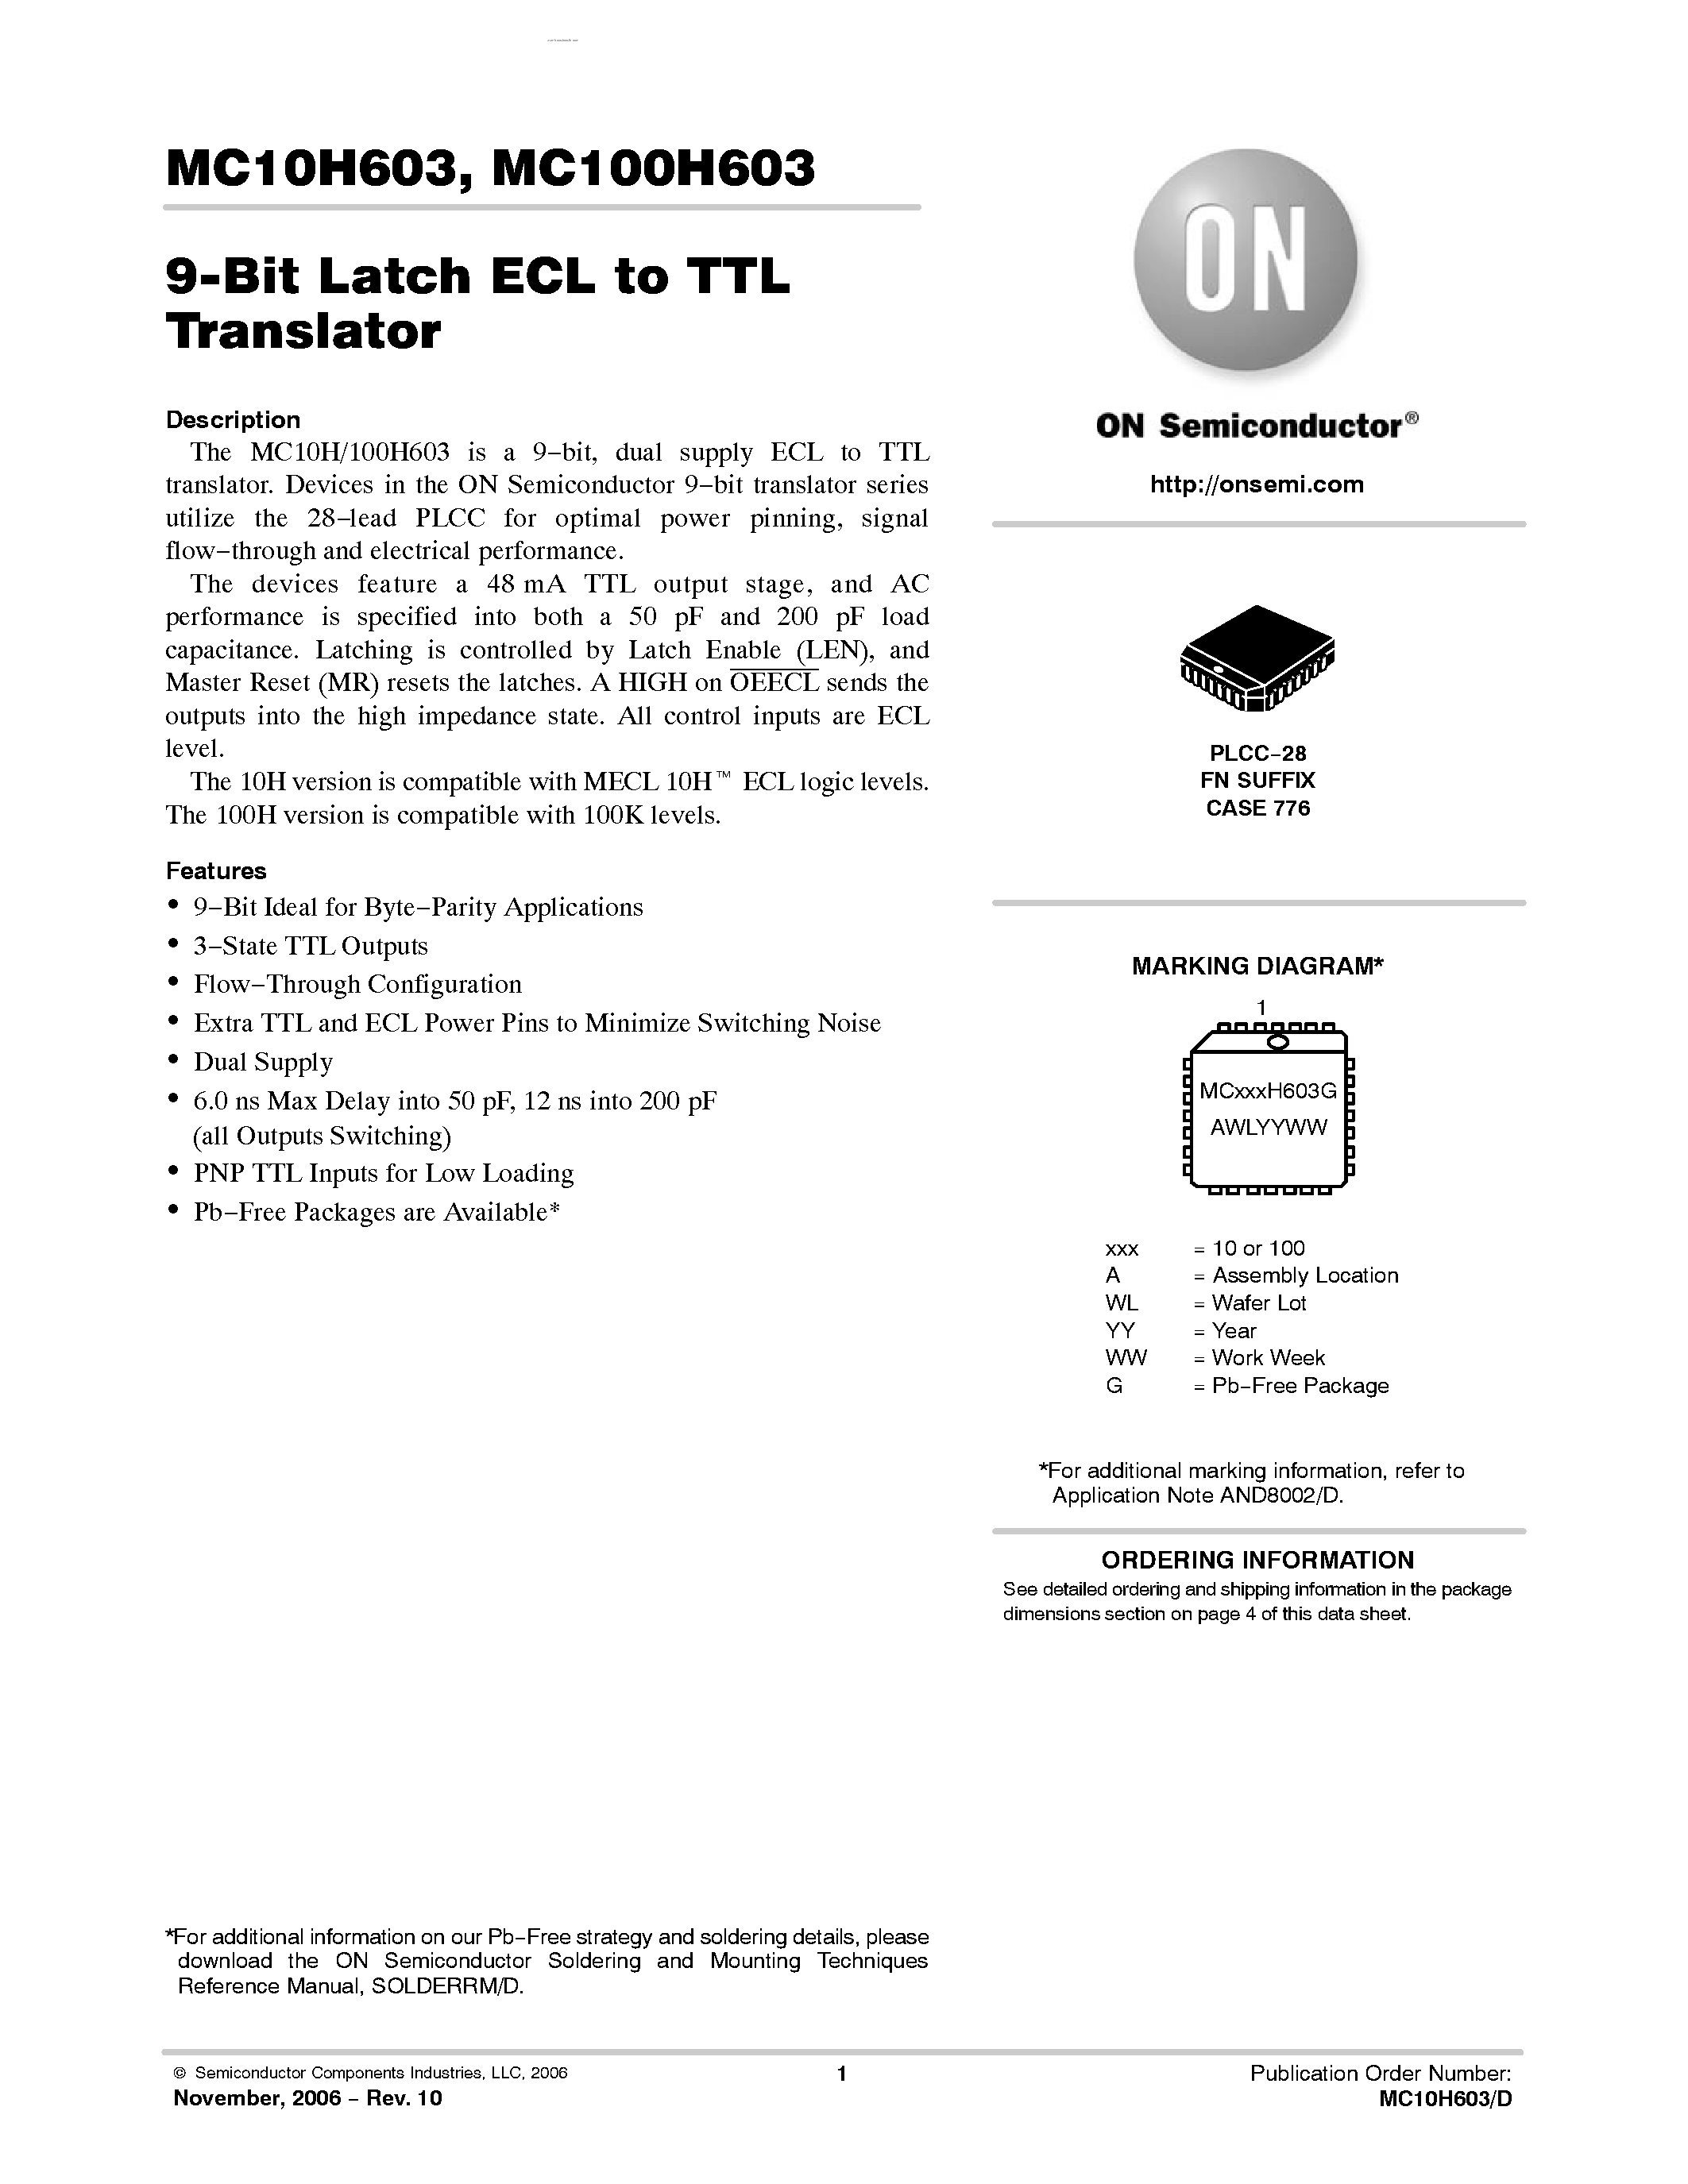 Datasheet MC10H603 - 9-Bit Latch ECL/TTL Translator page 1